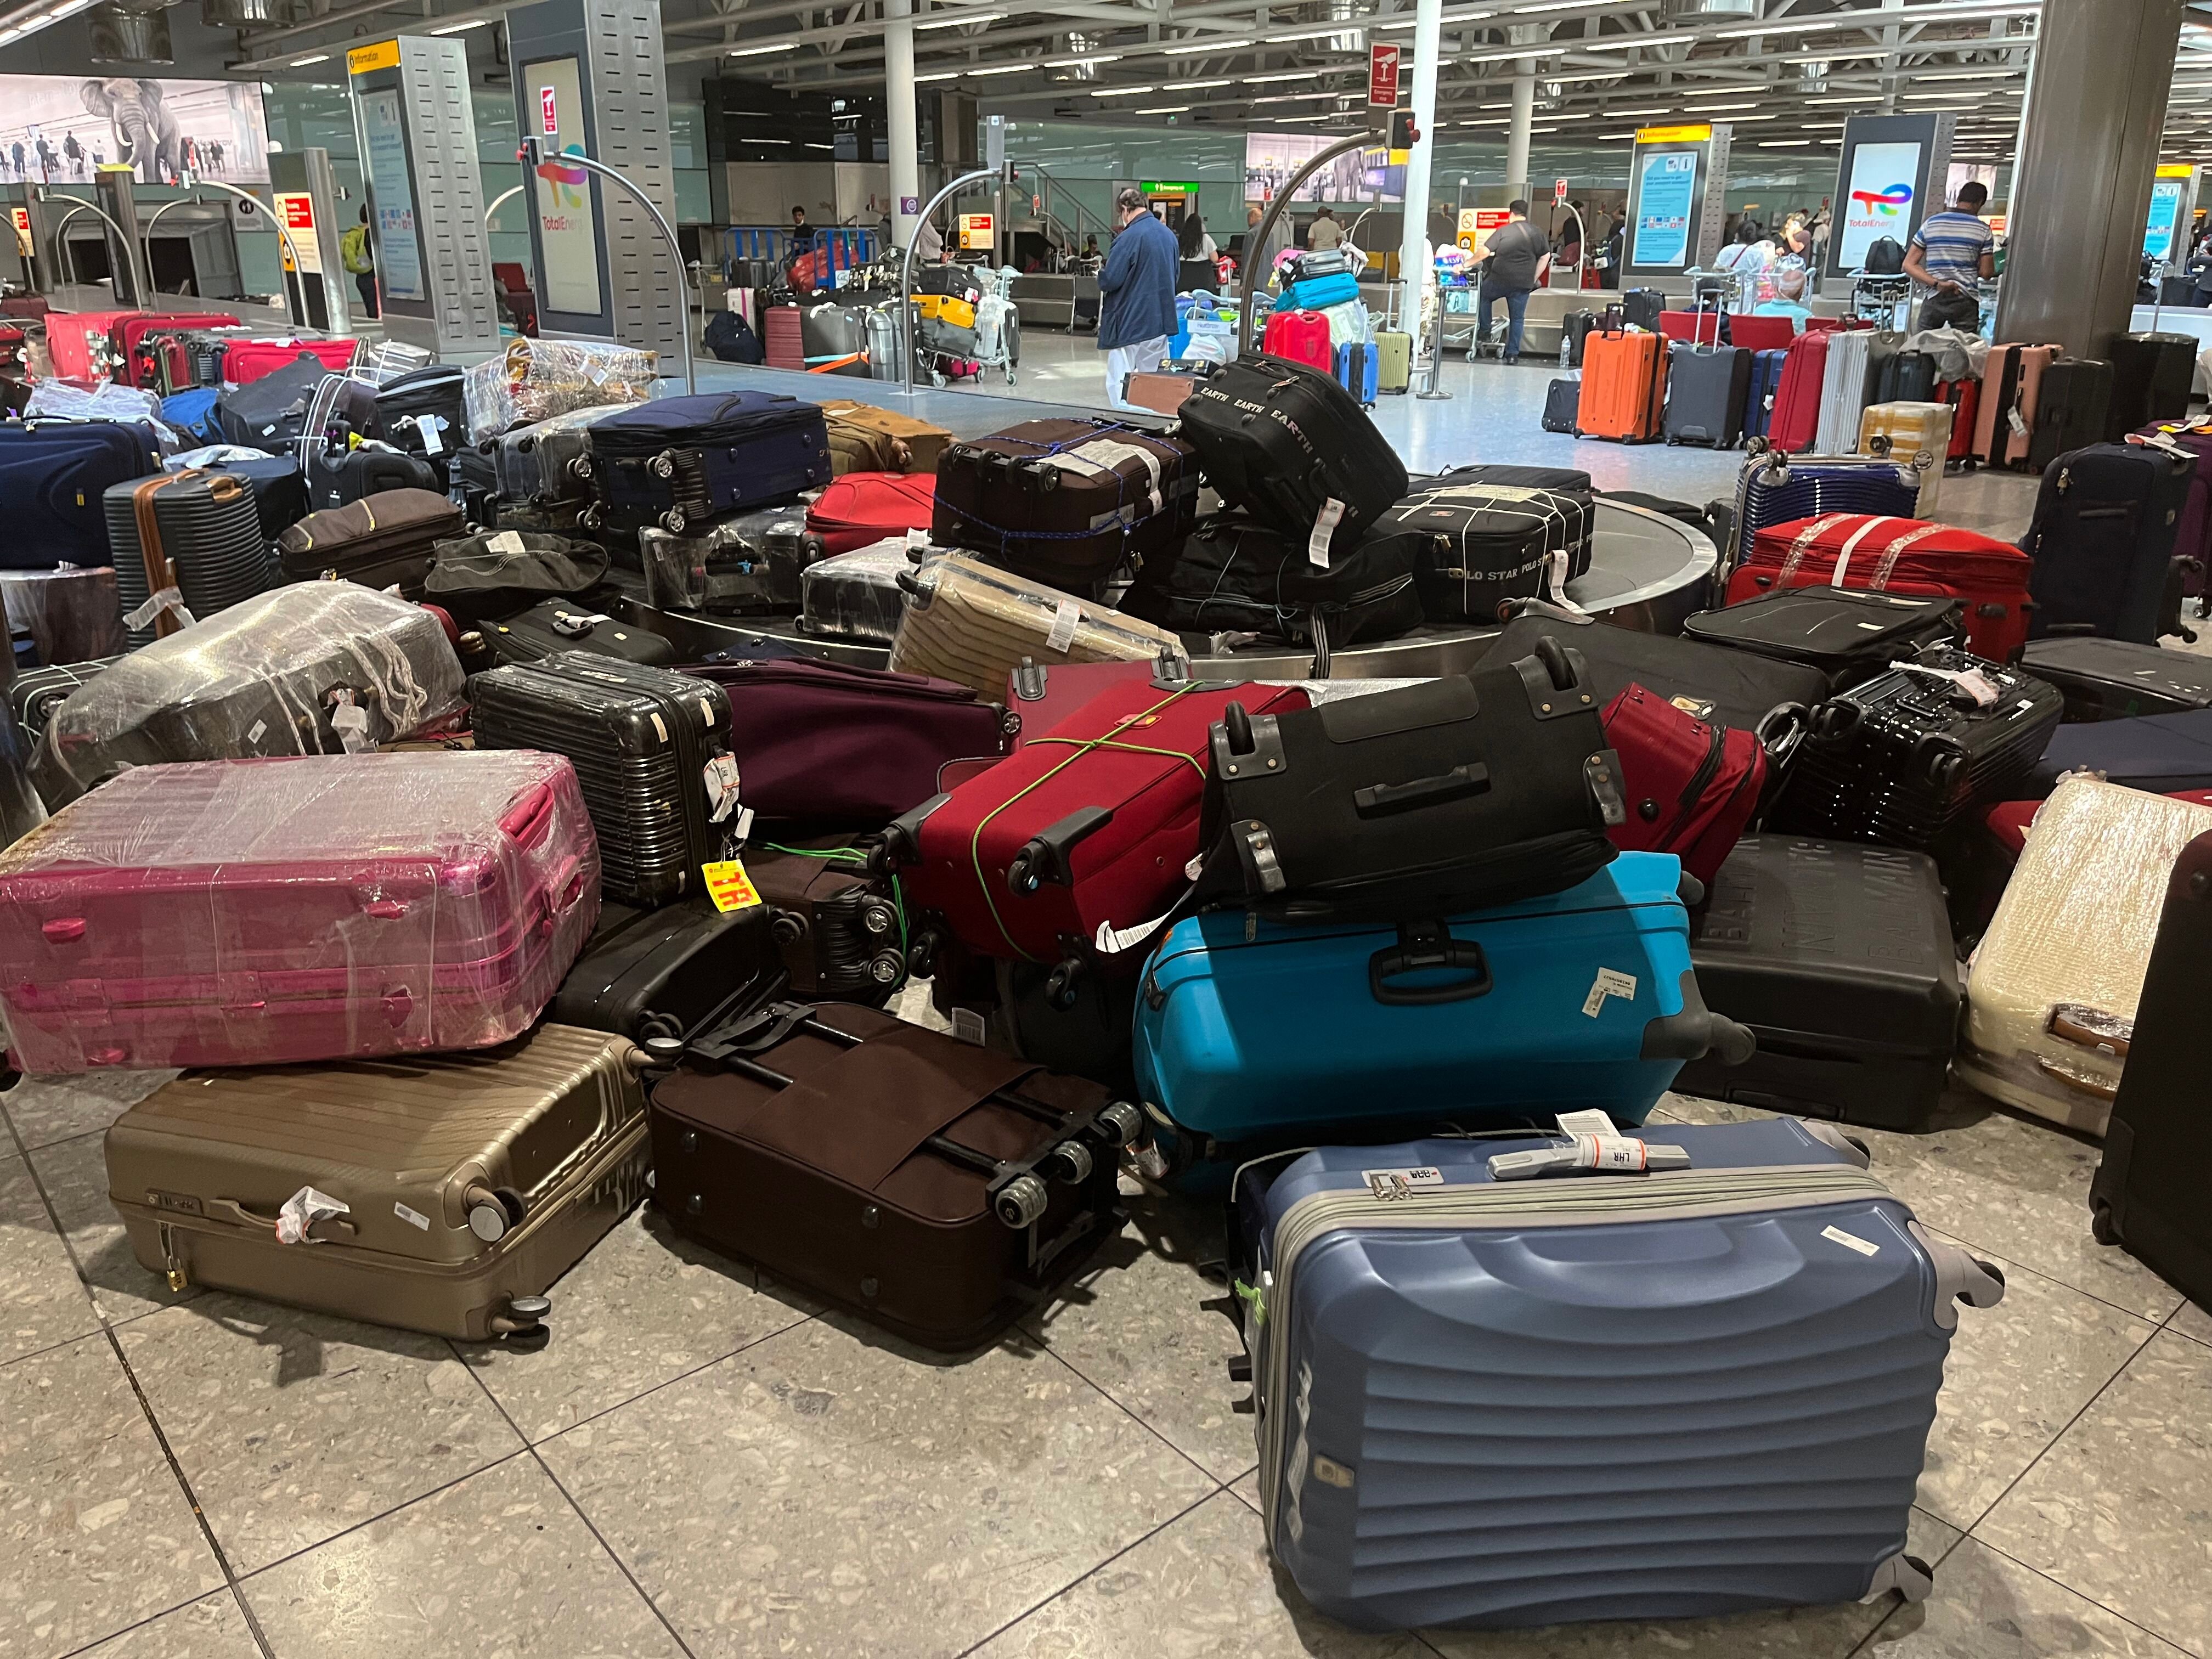 Heading Off Lost Luggage Headaches | Sports Destination Management